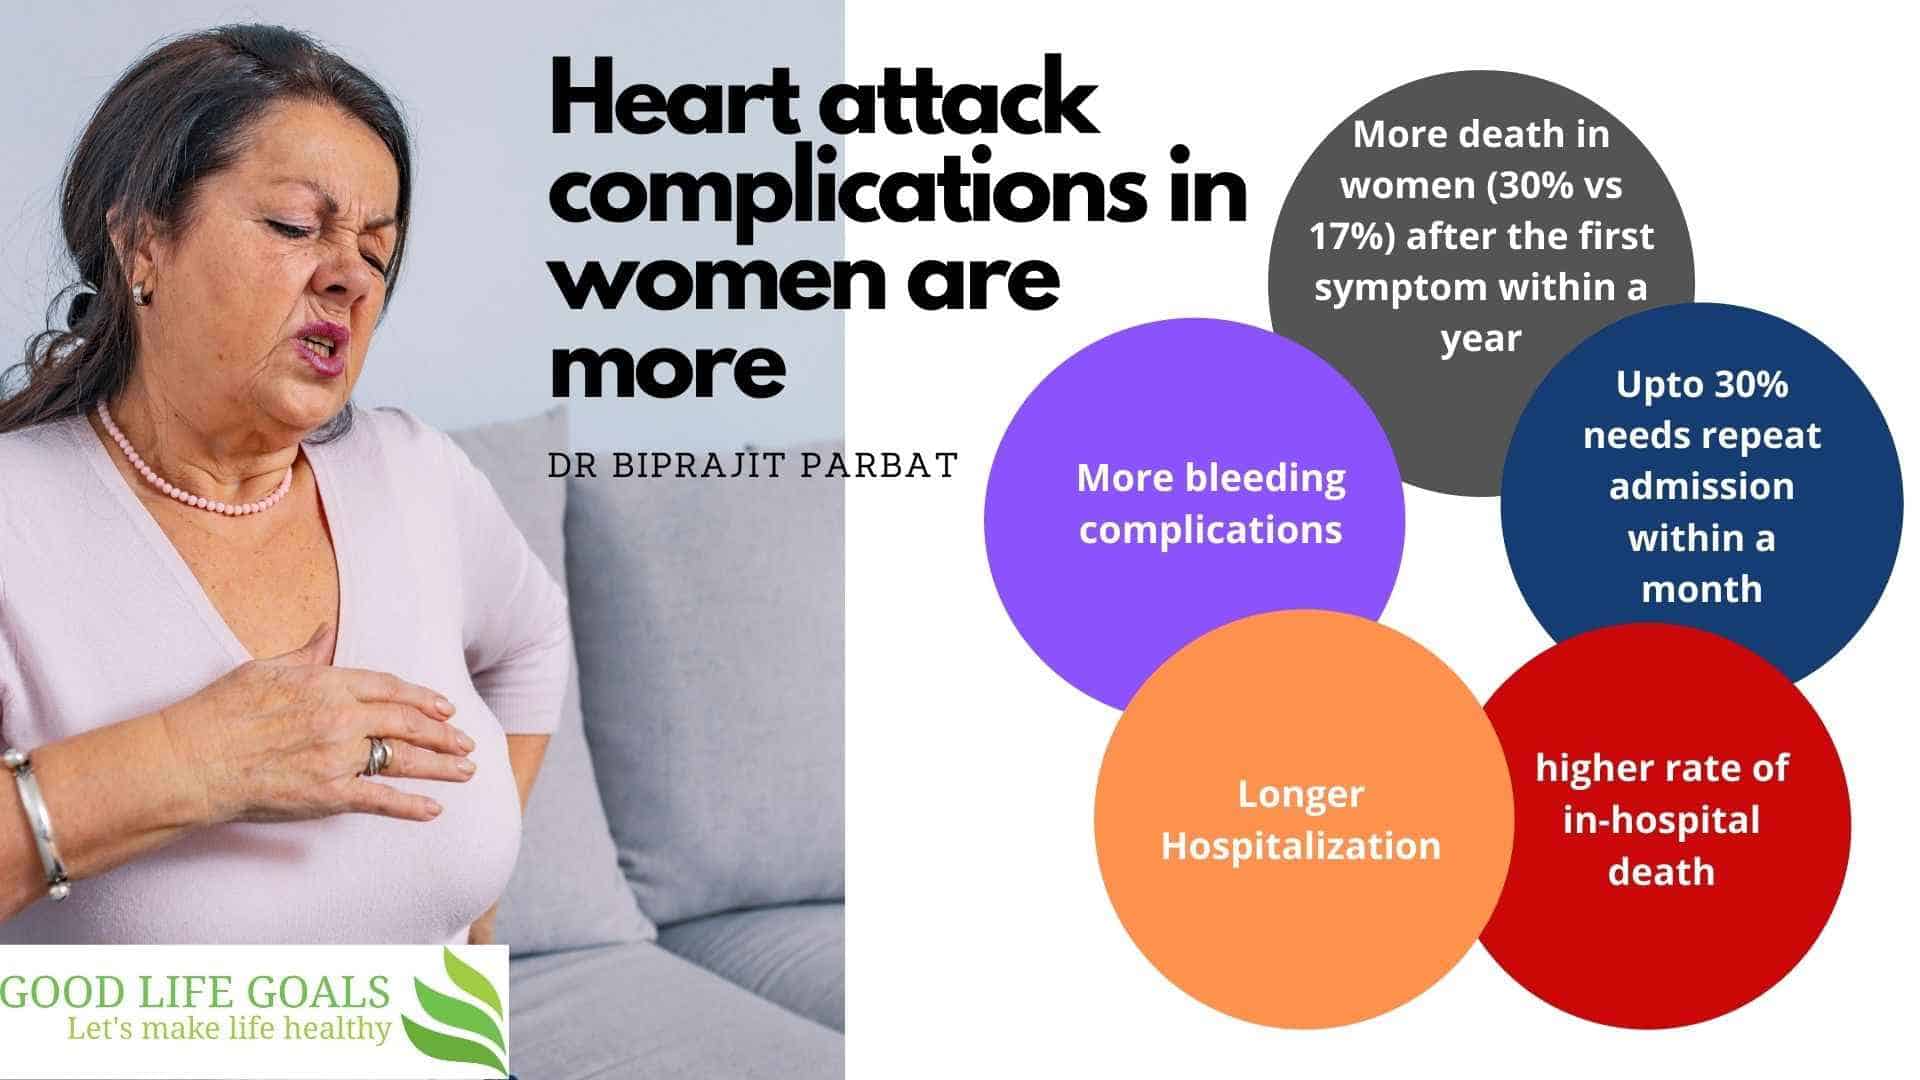 Heart Attack symptoms in Women are different